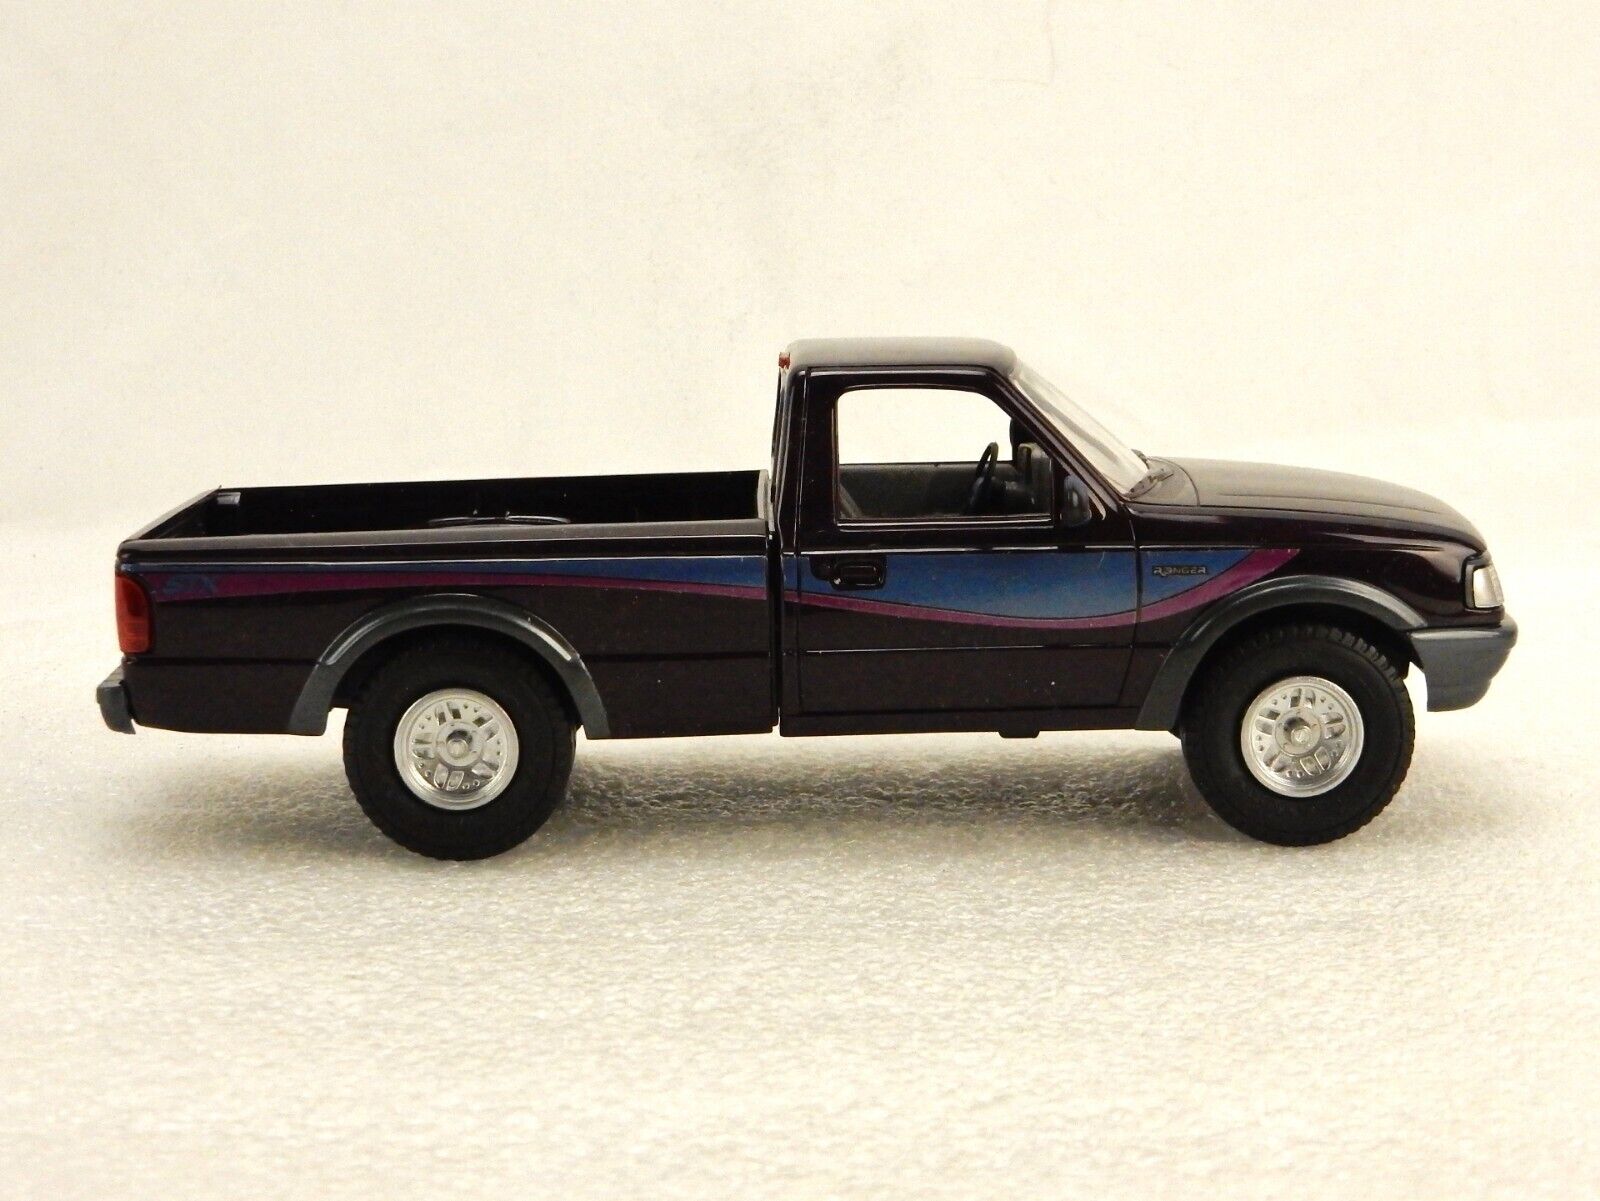 1993 Ford Ranger STX 4X4 Pickup, ERTL/AMT #6603, Dark Plum Metallic, Collector